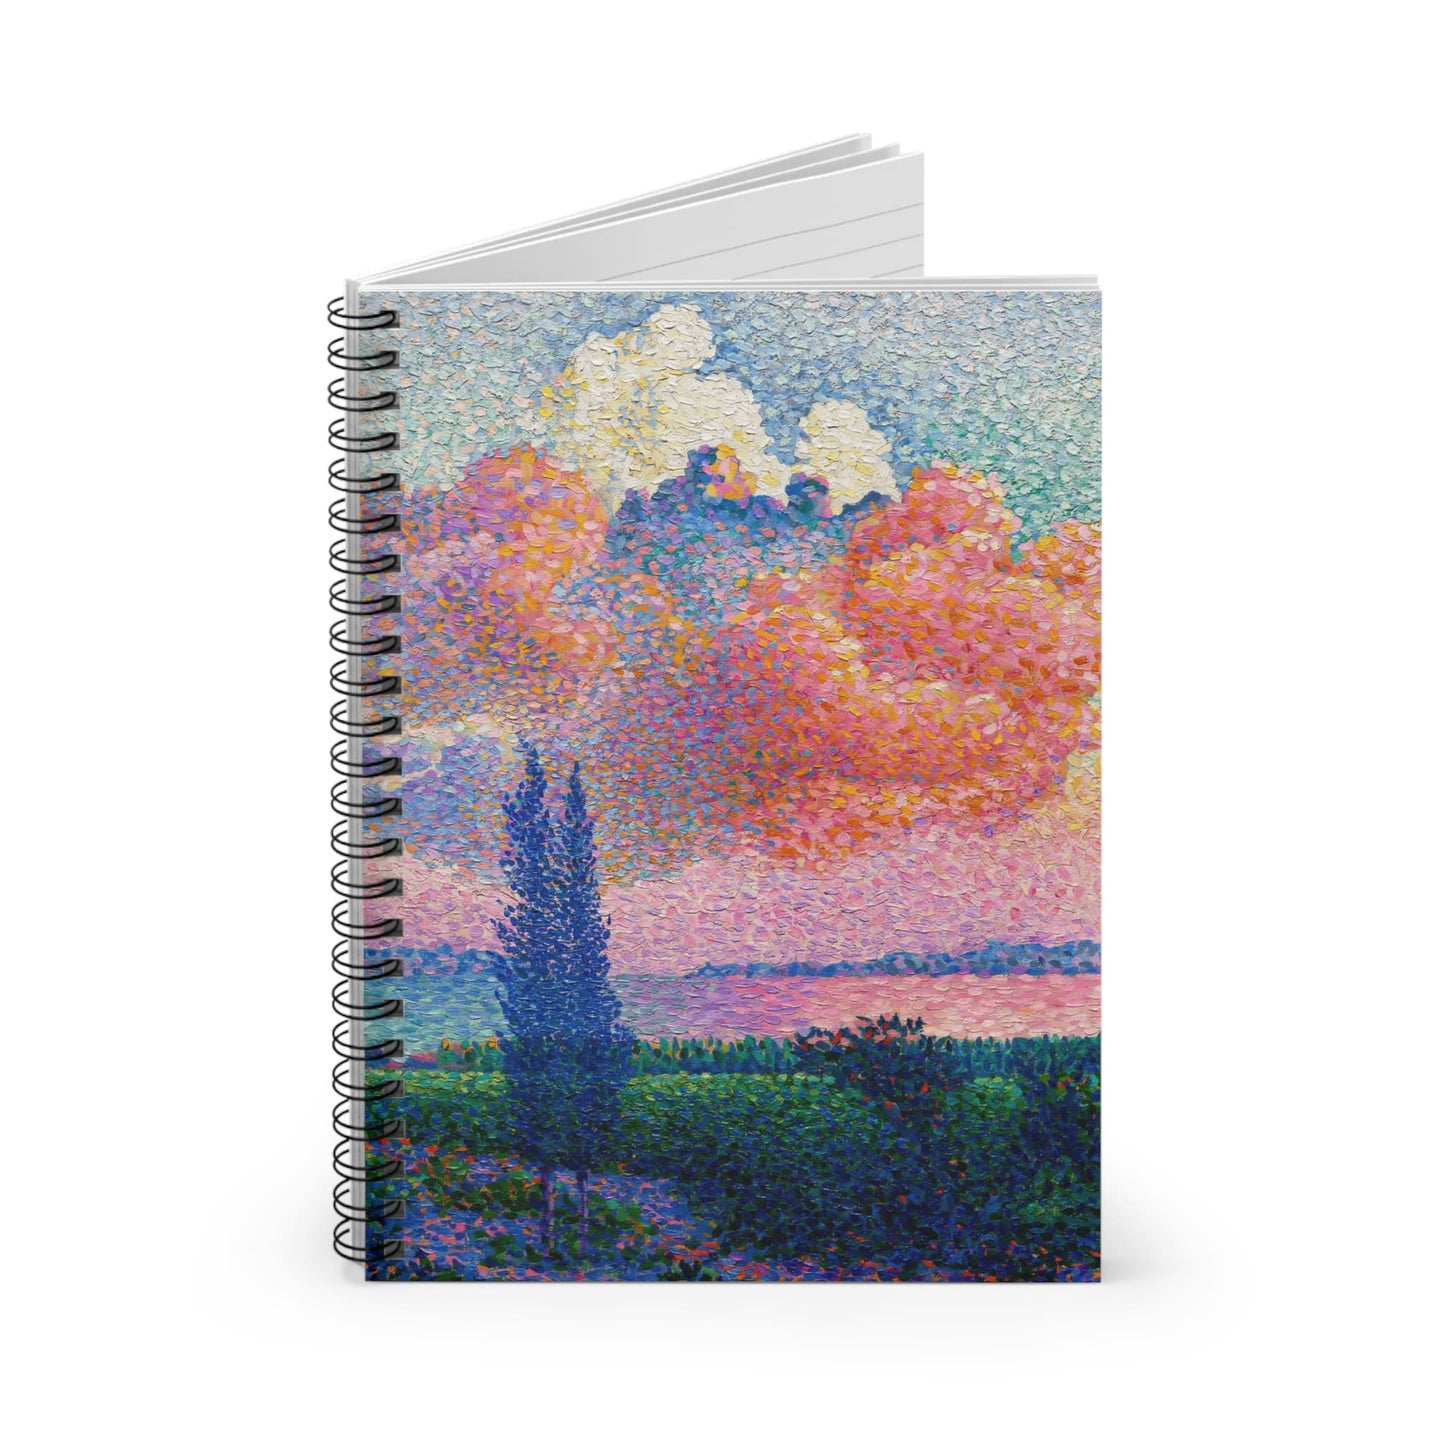 Dreamy Landscape Spiral Notebook Standing up on White Desk